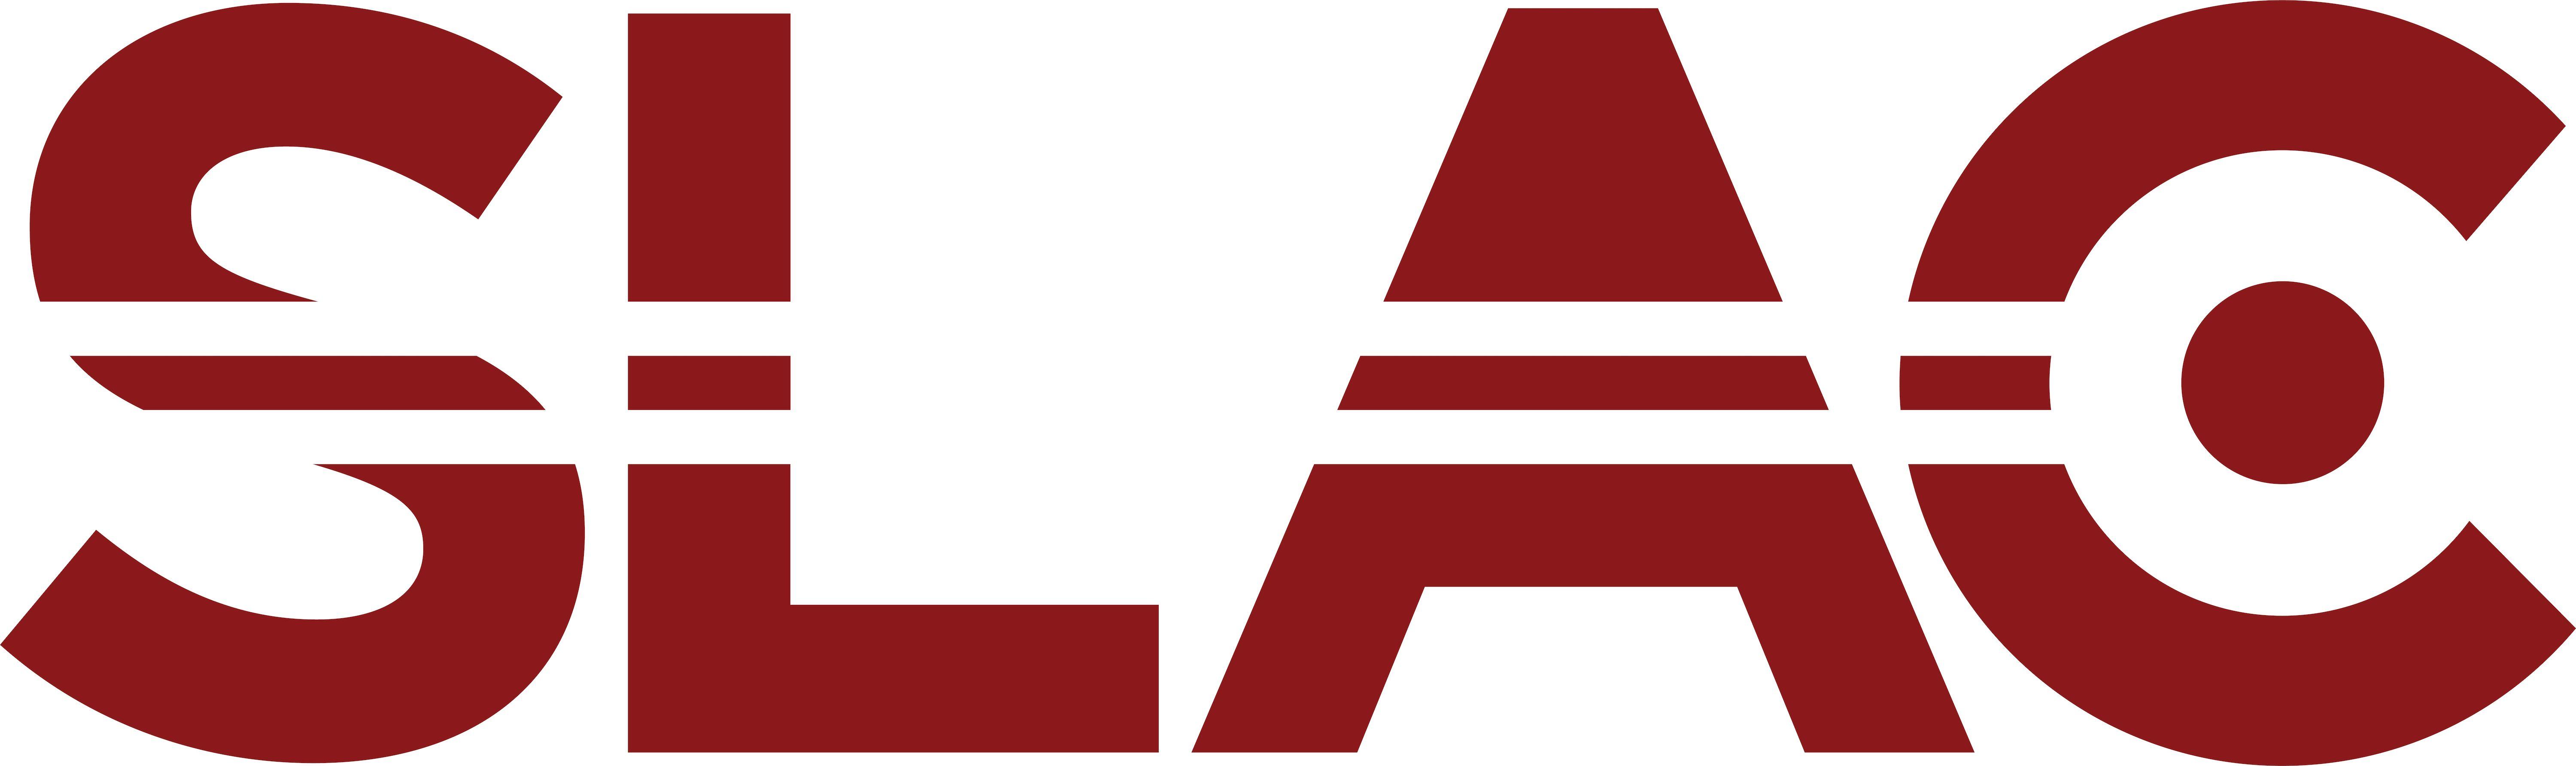 SLAC Logo - Logo Resources | SLAC National Accelerator Laboratory